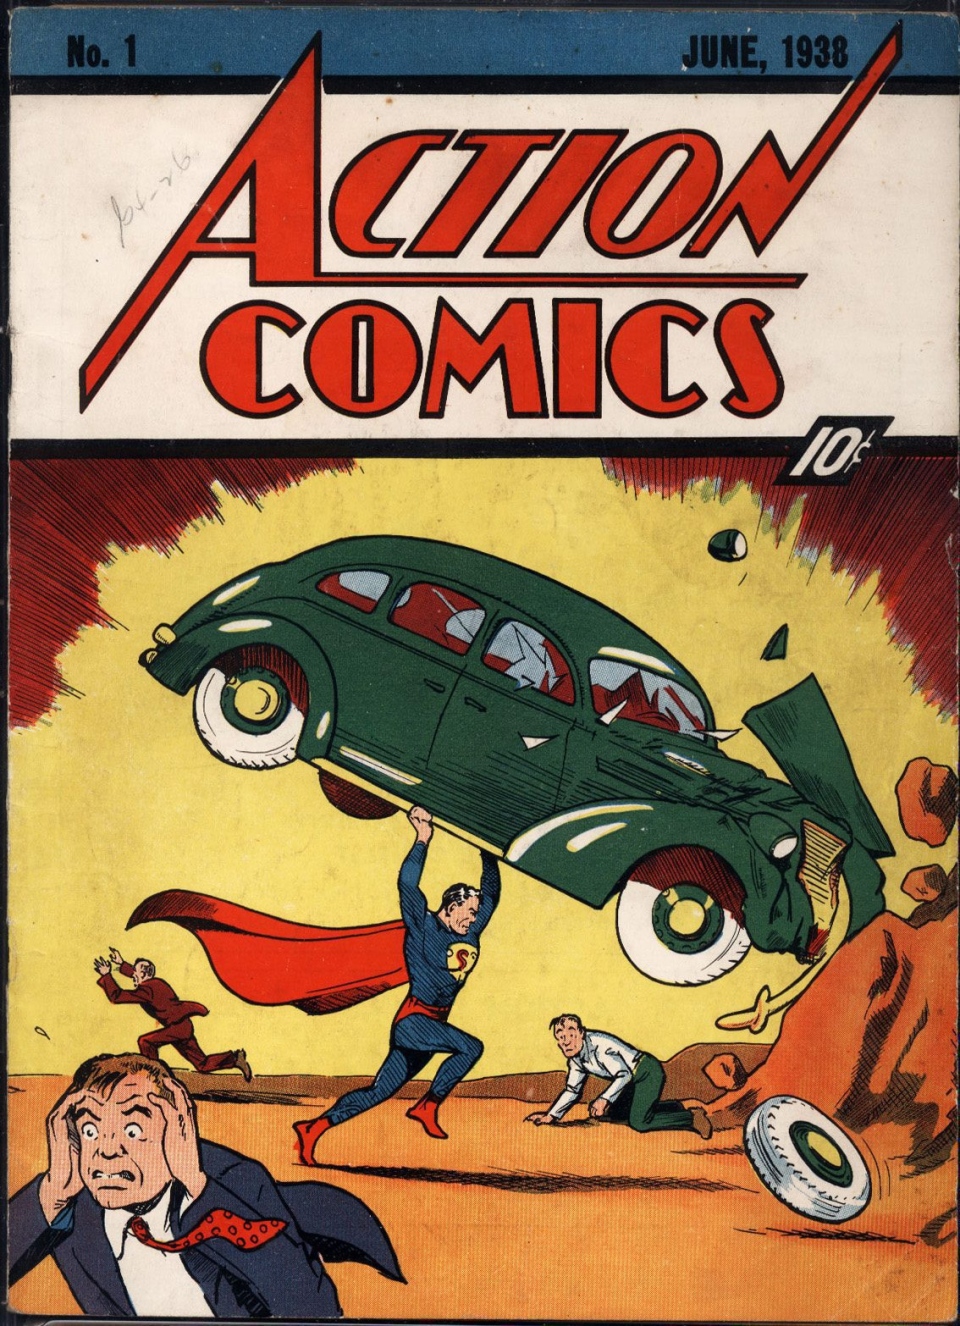 Original Superman comic sells for record $3.2M | Entertainment ...